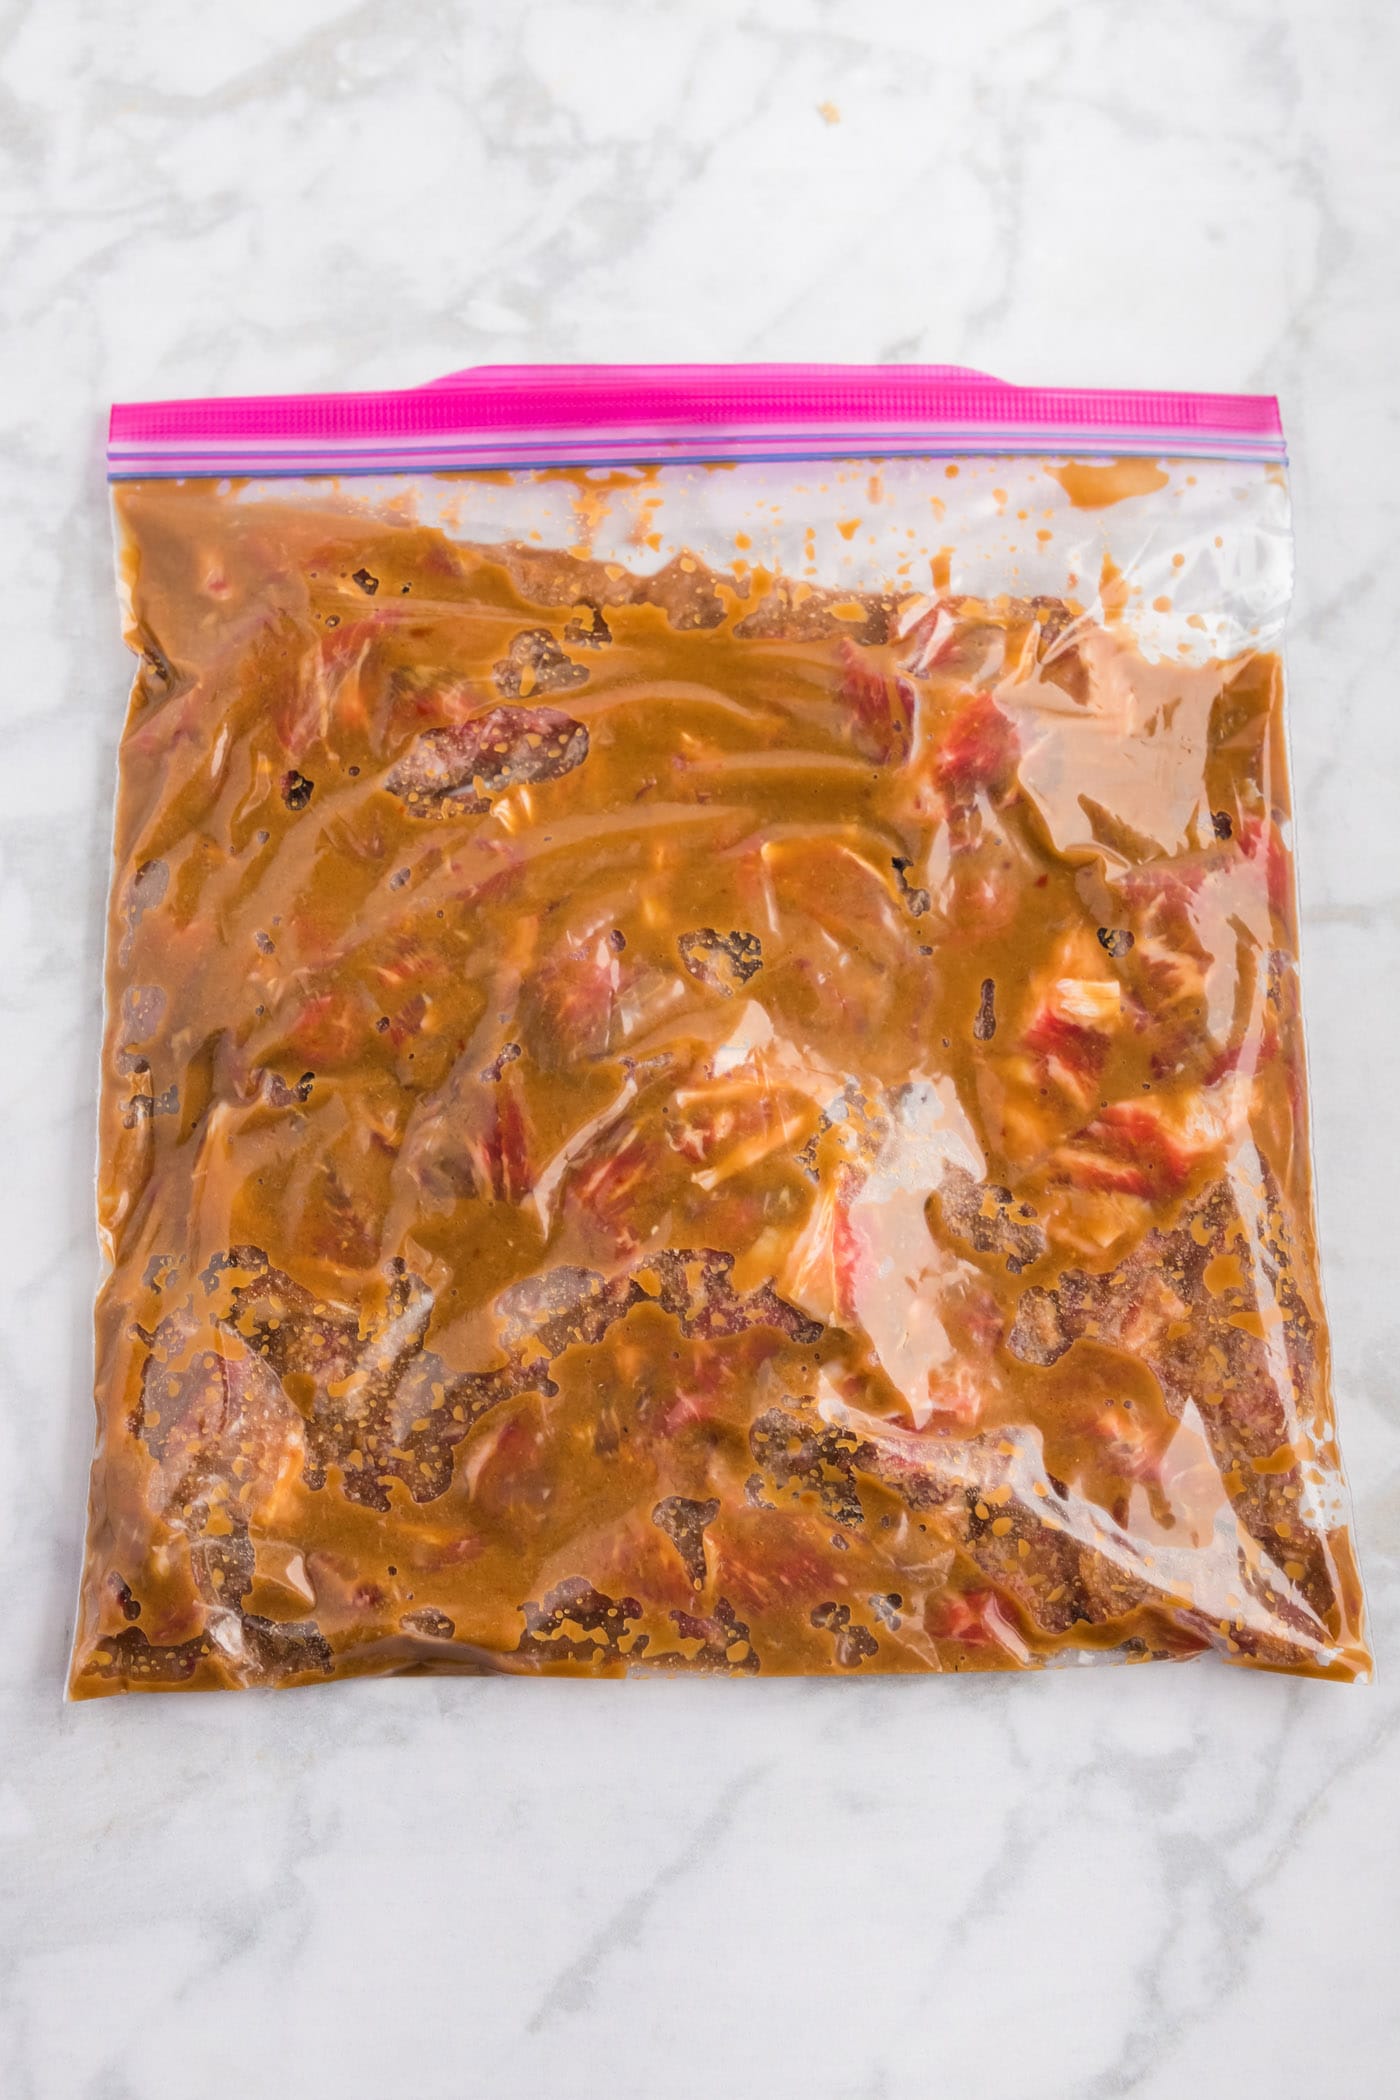 marinating ribeye steak in a large ziptop bag